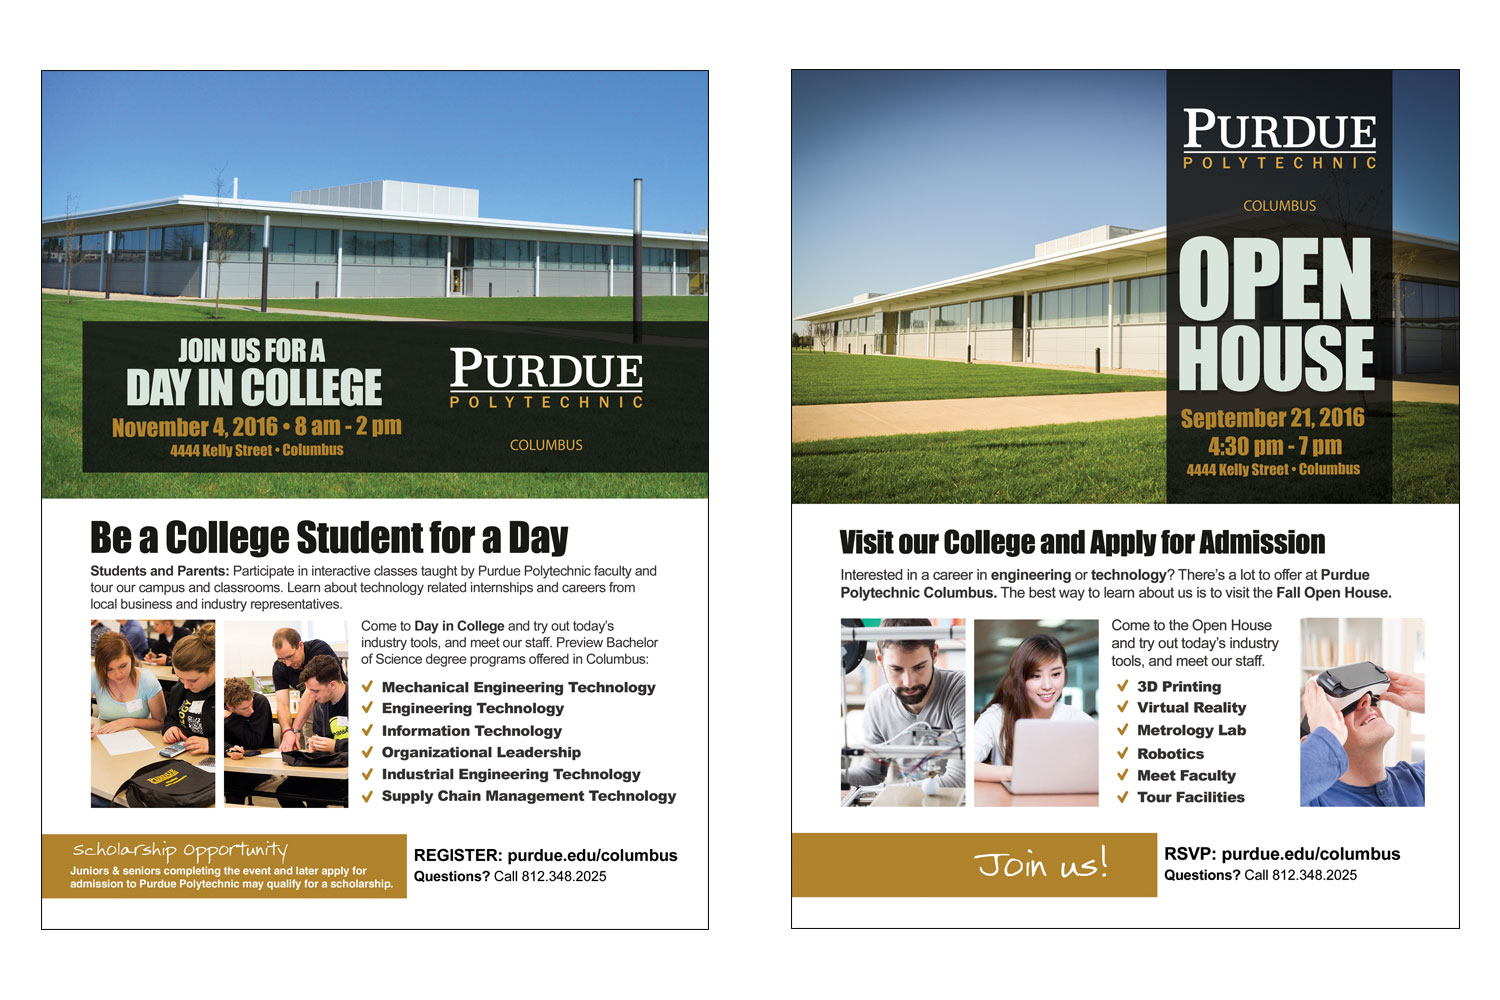 Purdue Polytechnic Columbus - TD Advertising